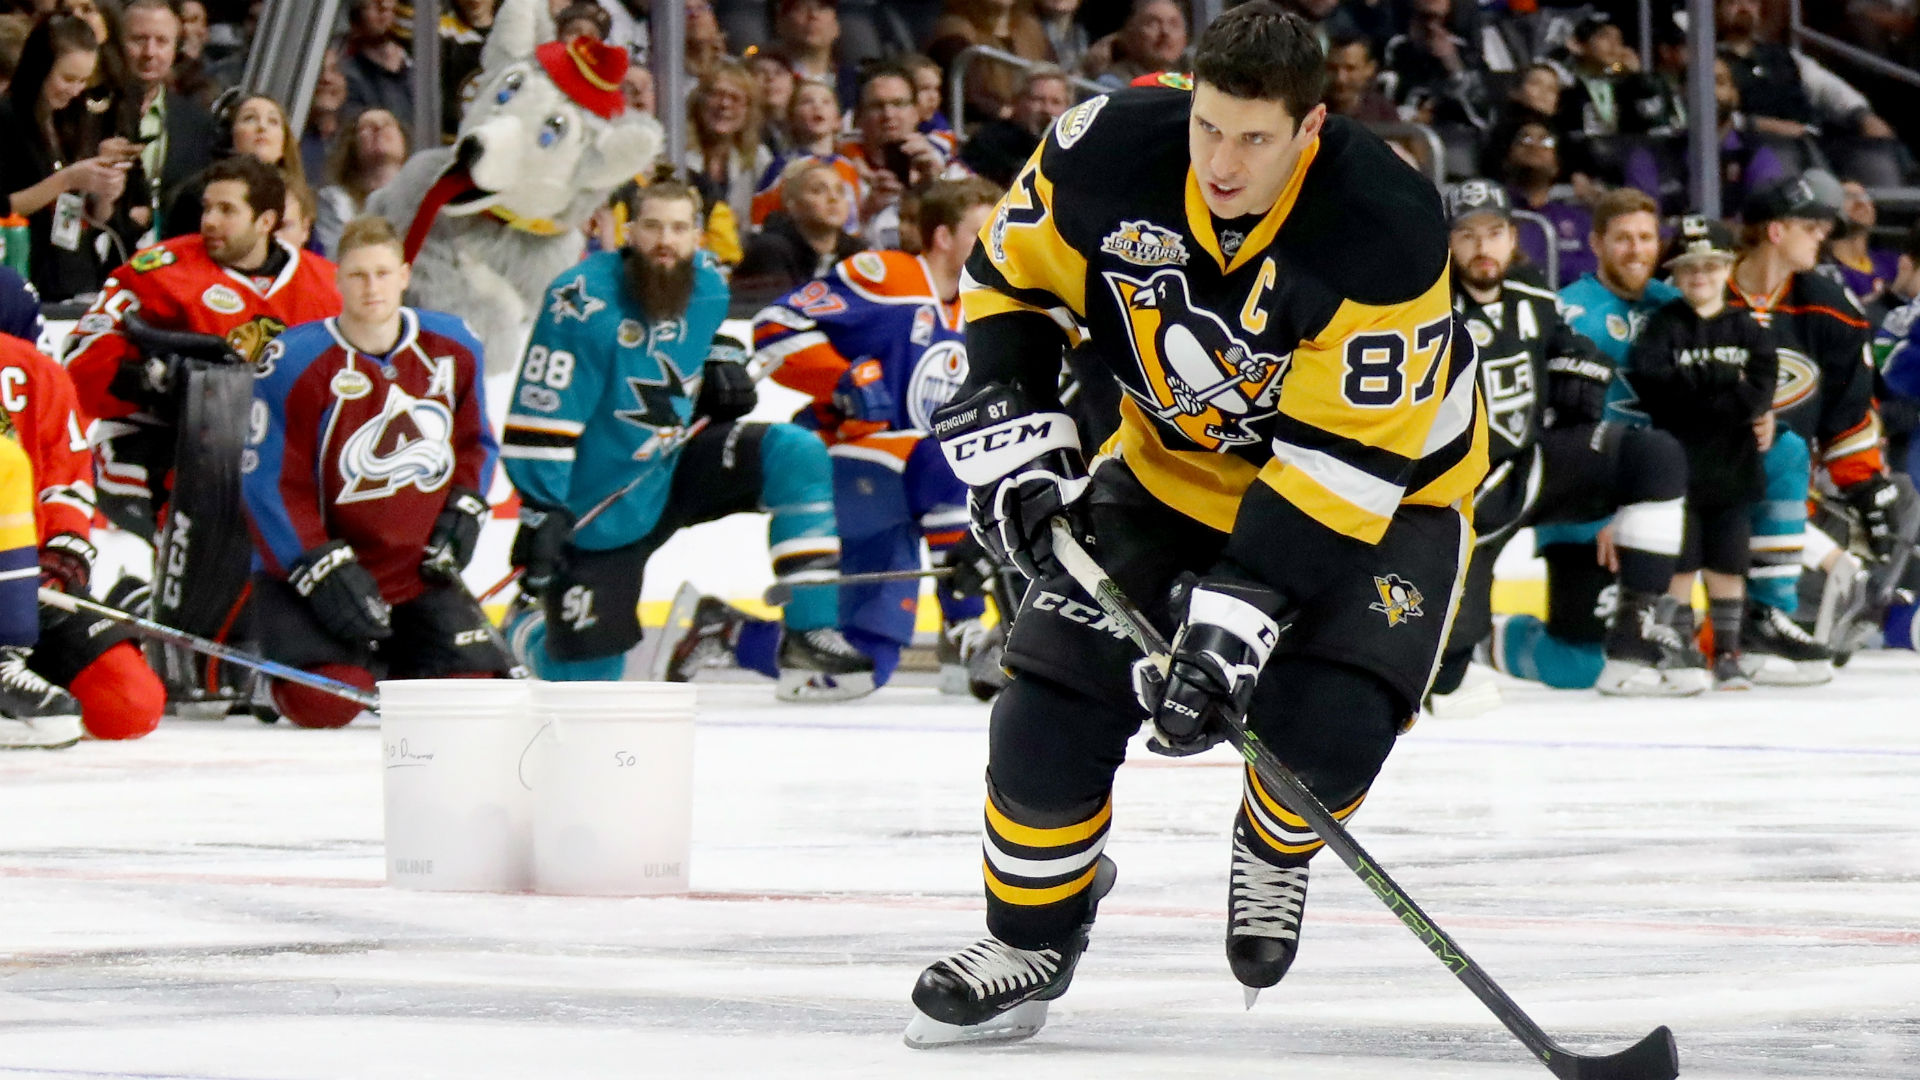 Sidney Crosby skipping All-Star skills competition | Sporting News Canada1920 x 1080